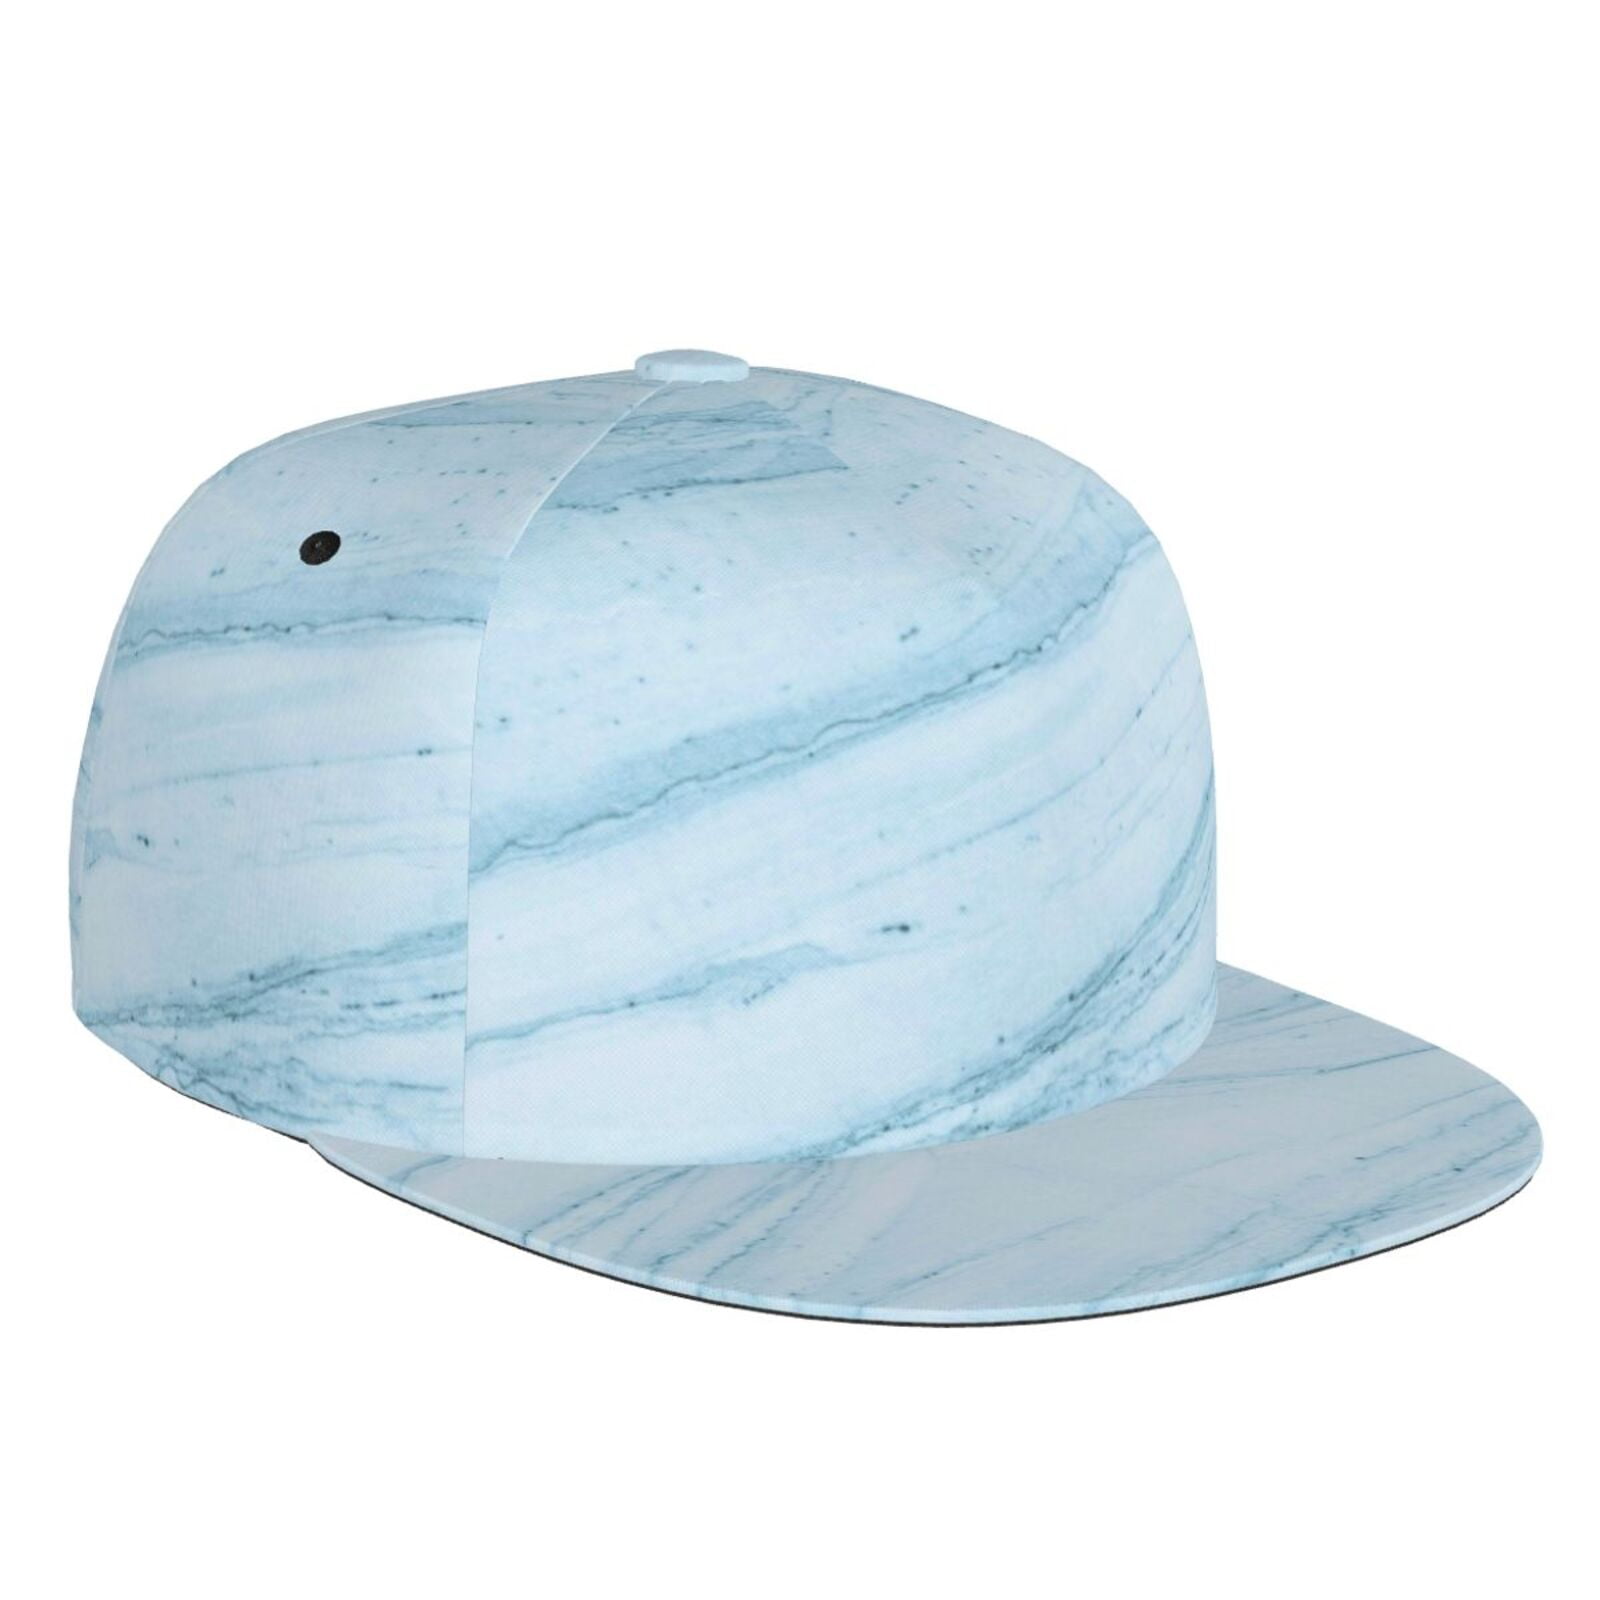 Bingfone Baseball Cap,Snapback Trucker Hat for Men & Women with ...